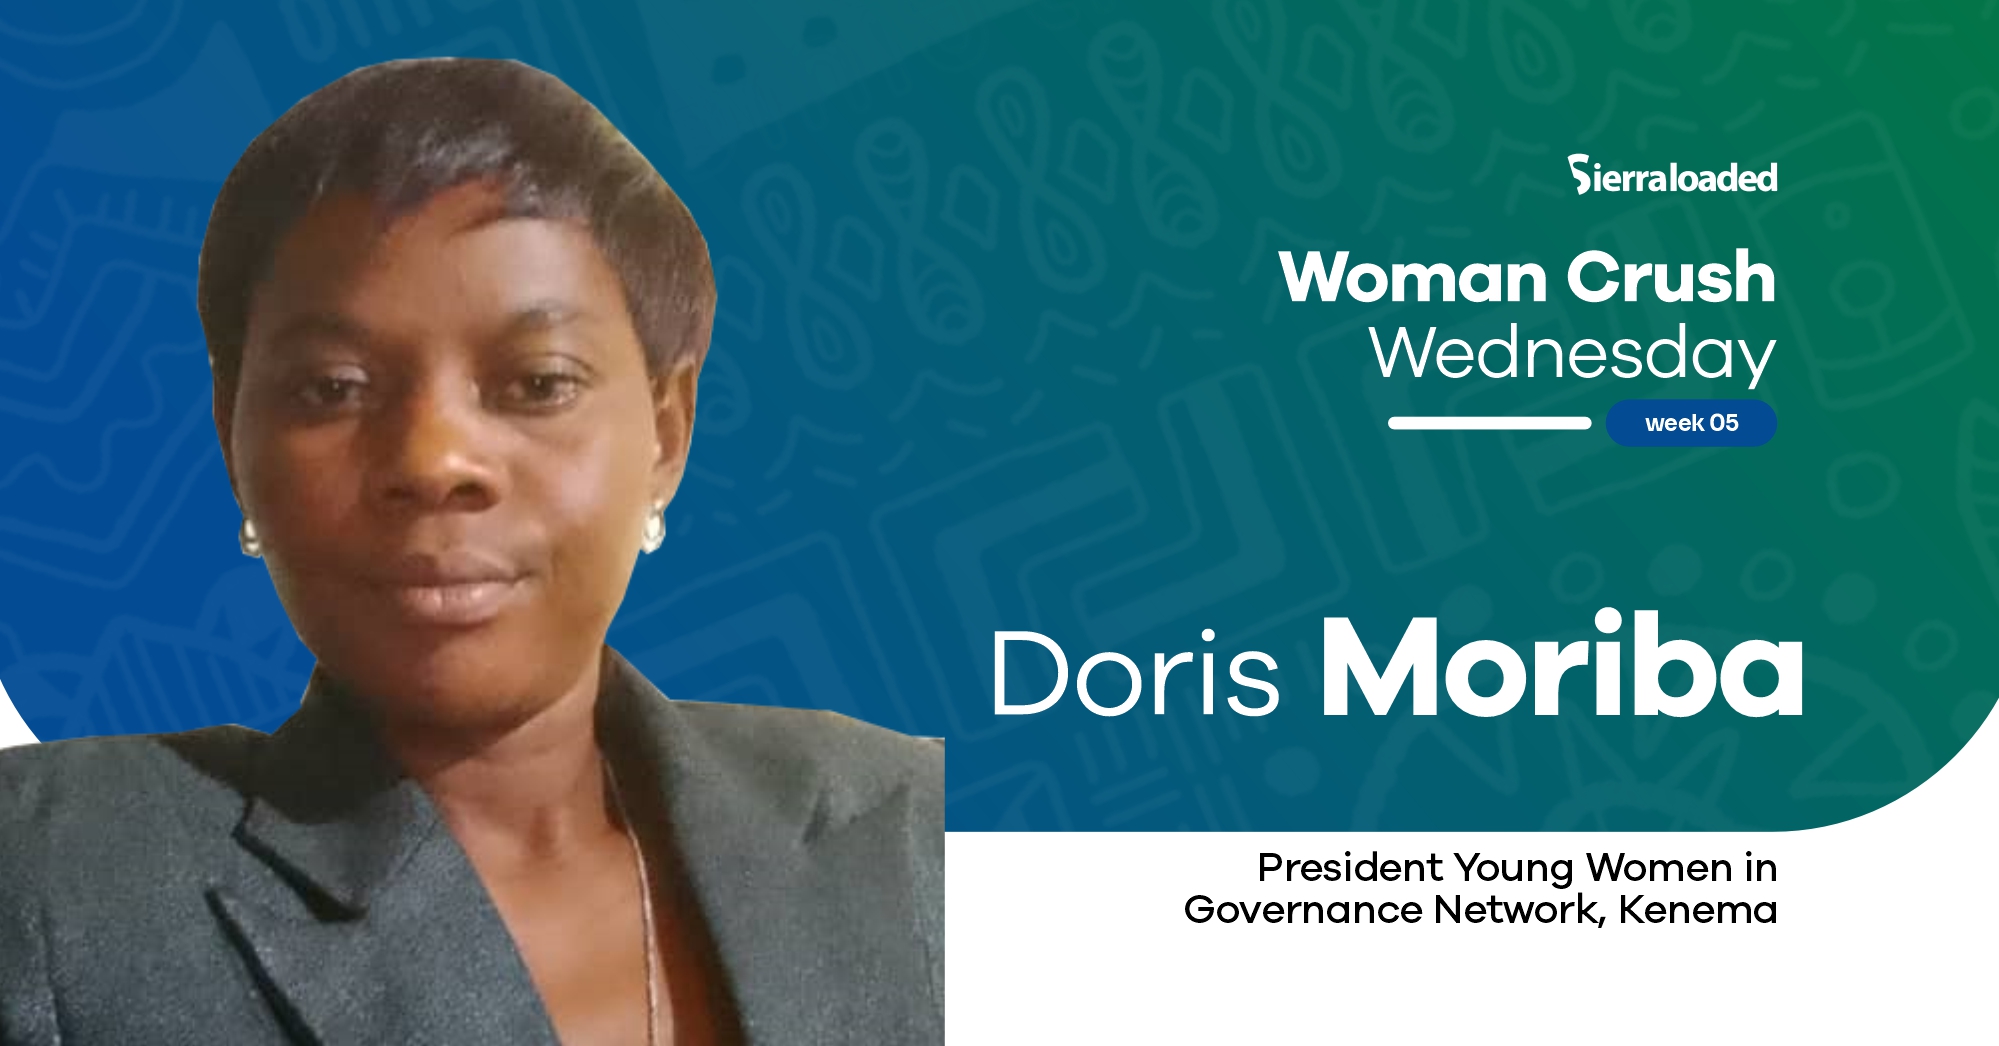 Meet Doris Moriba, Sierraloaded Woman Crush Wednesday